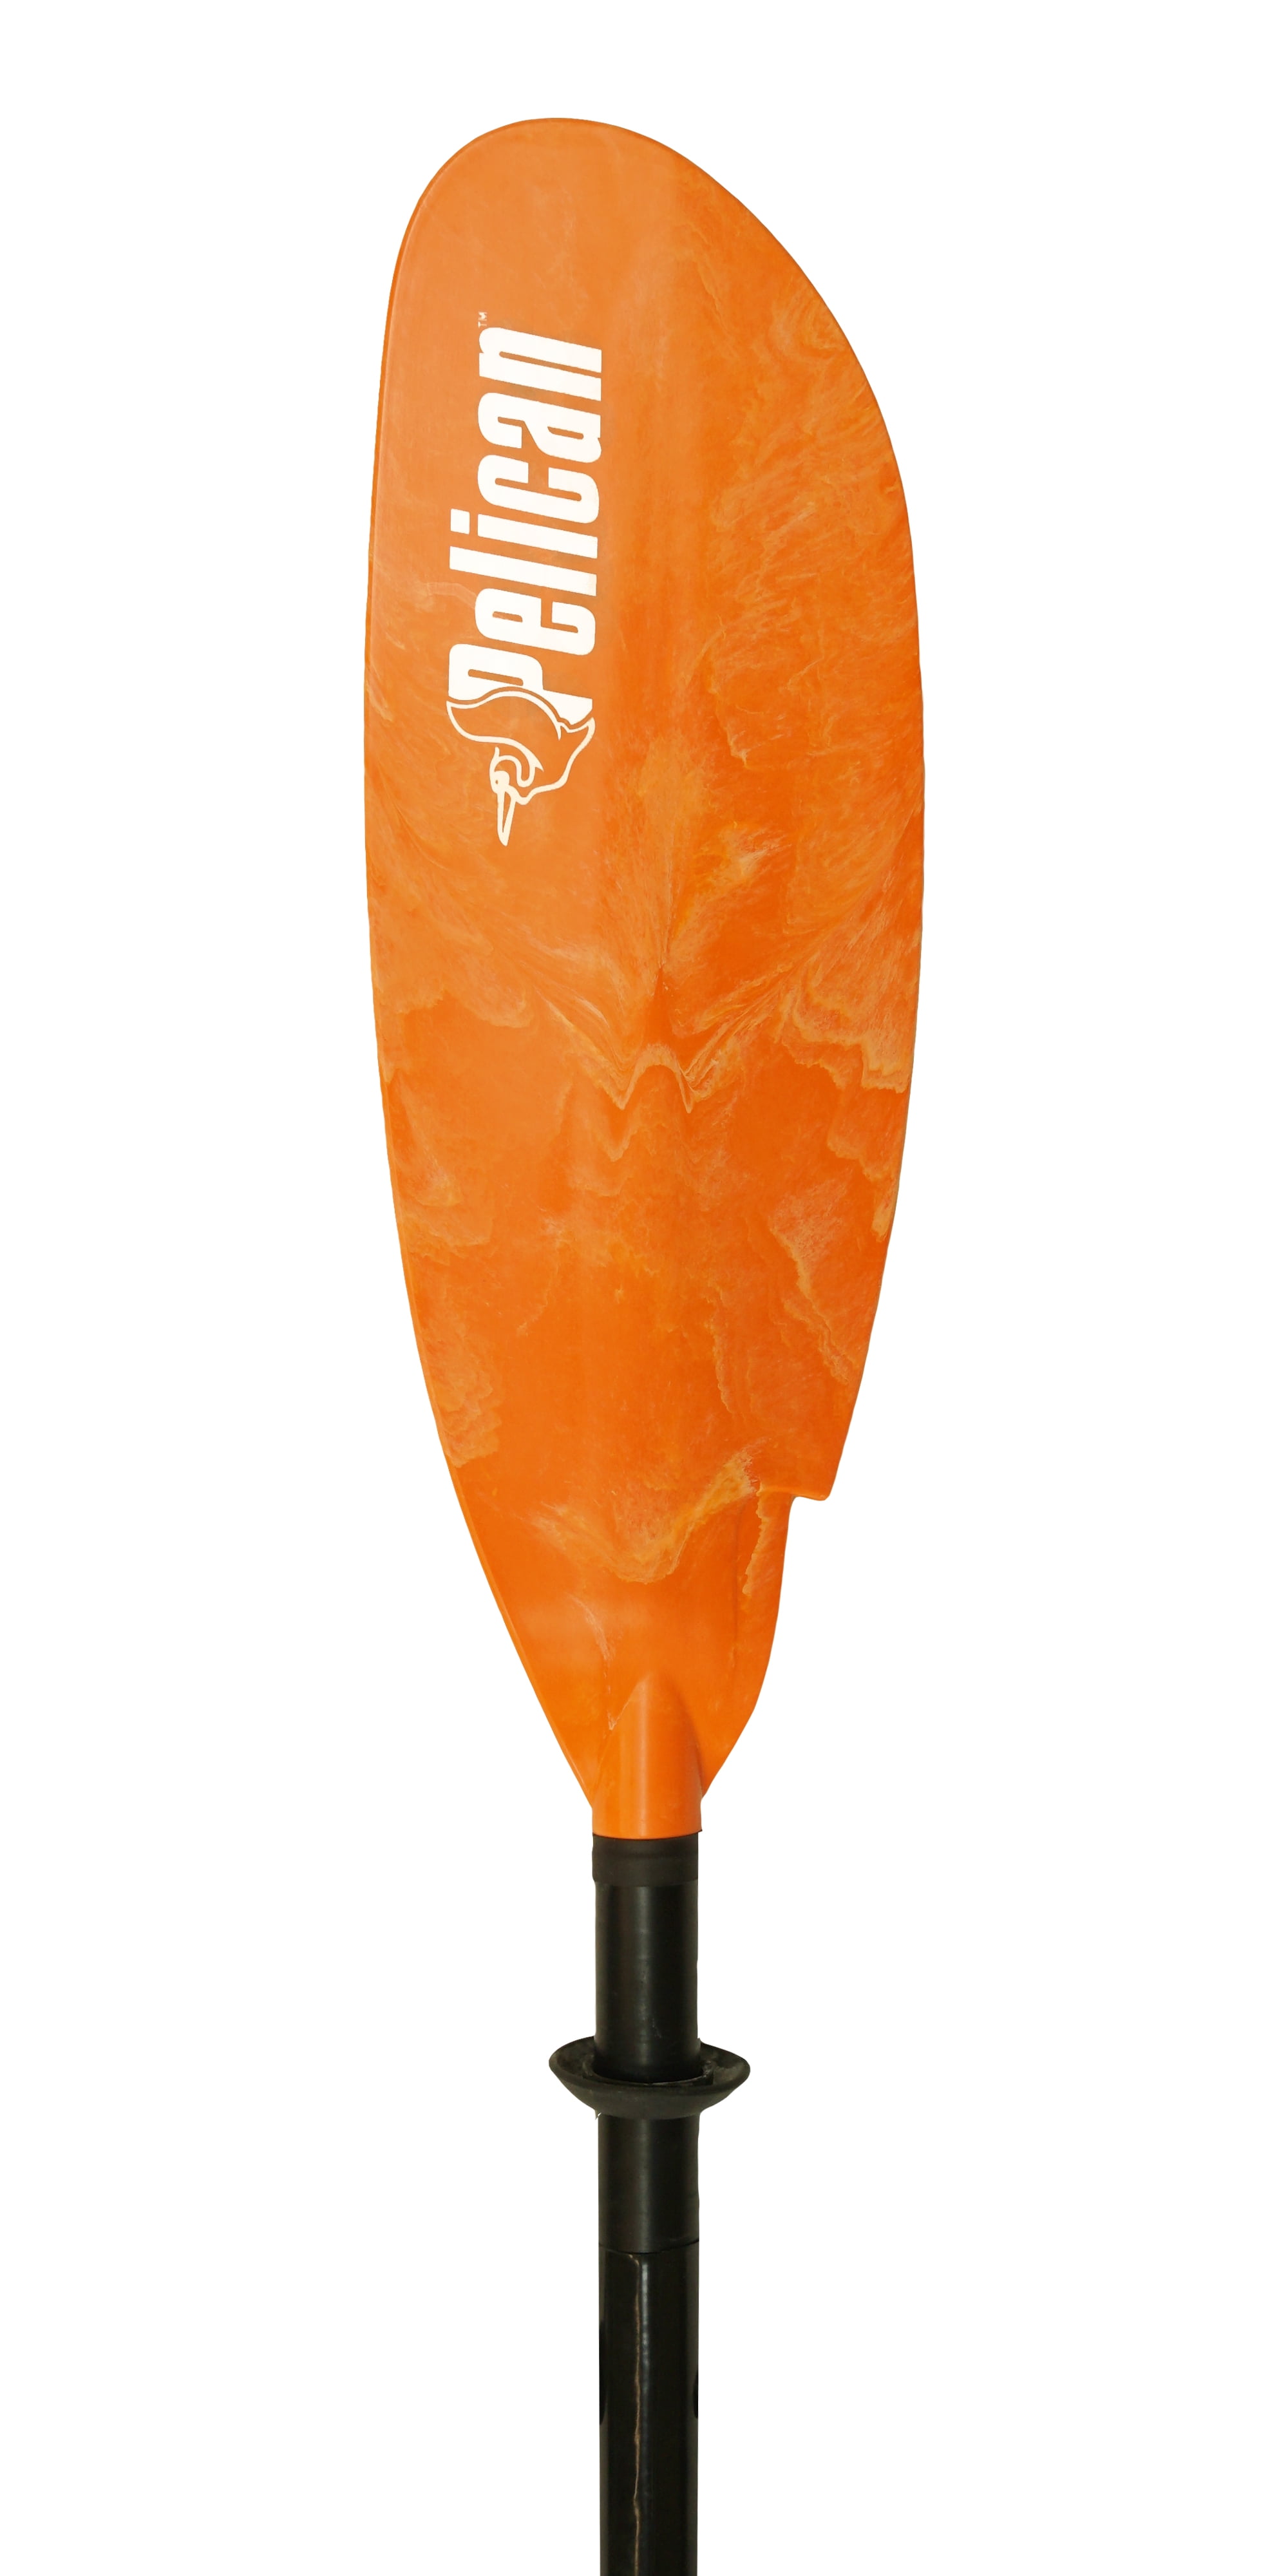 Poseidon kayak paddle 230 cm (90.5